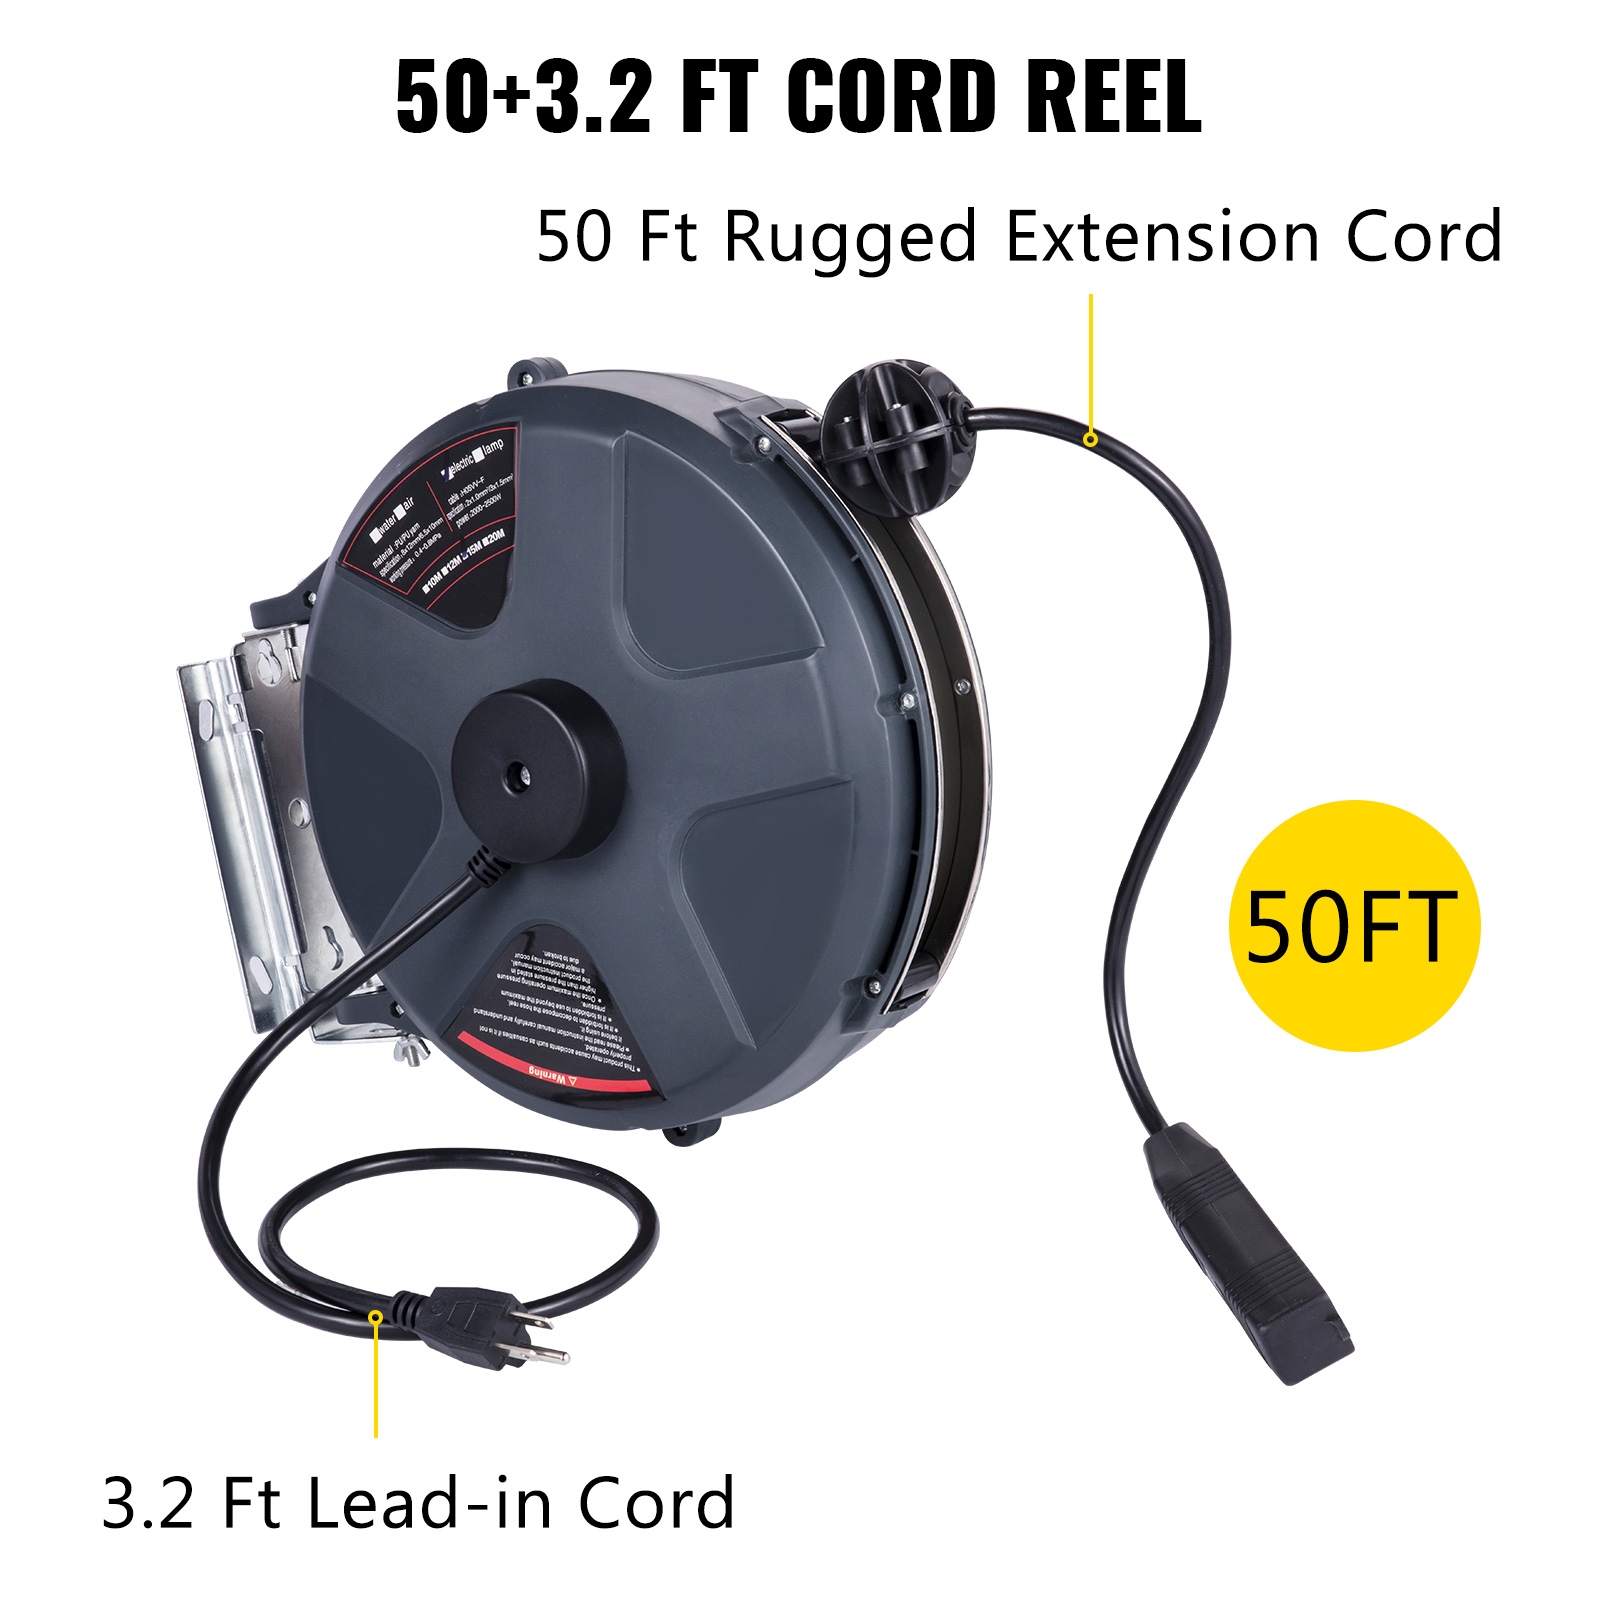 VEVOR Retractable Extension Cord Reel 50+3.2FT, 16/3 SJT Power Cord ...